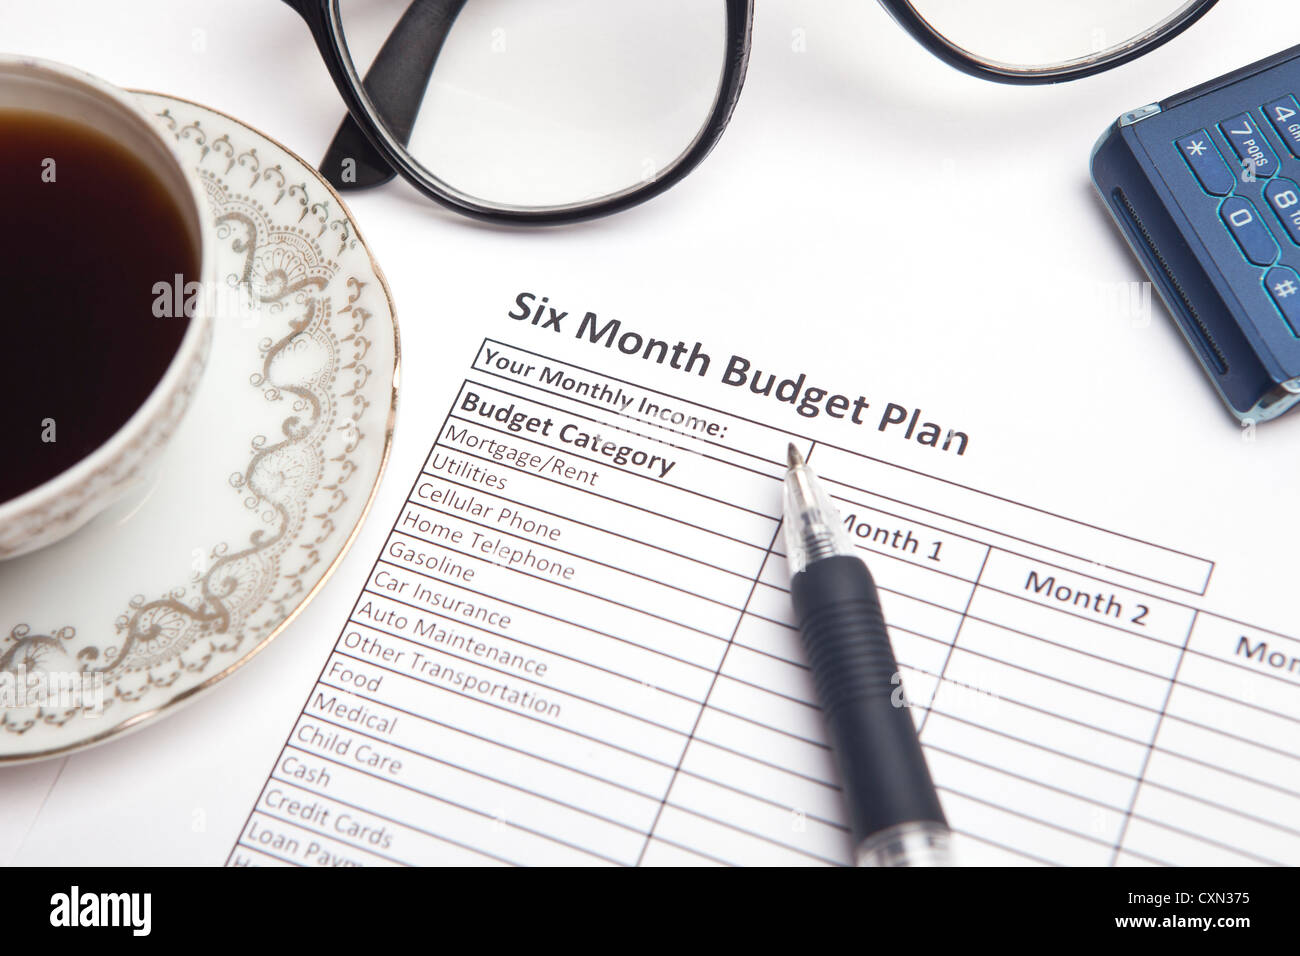 Six Month Budget Plan Stock Photo